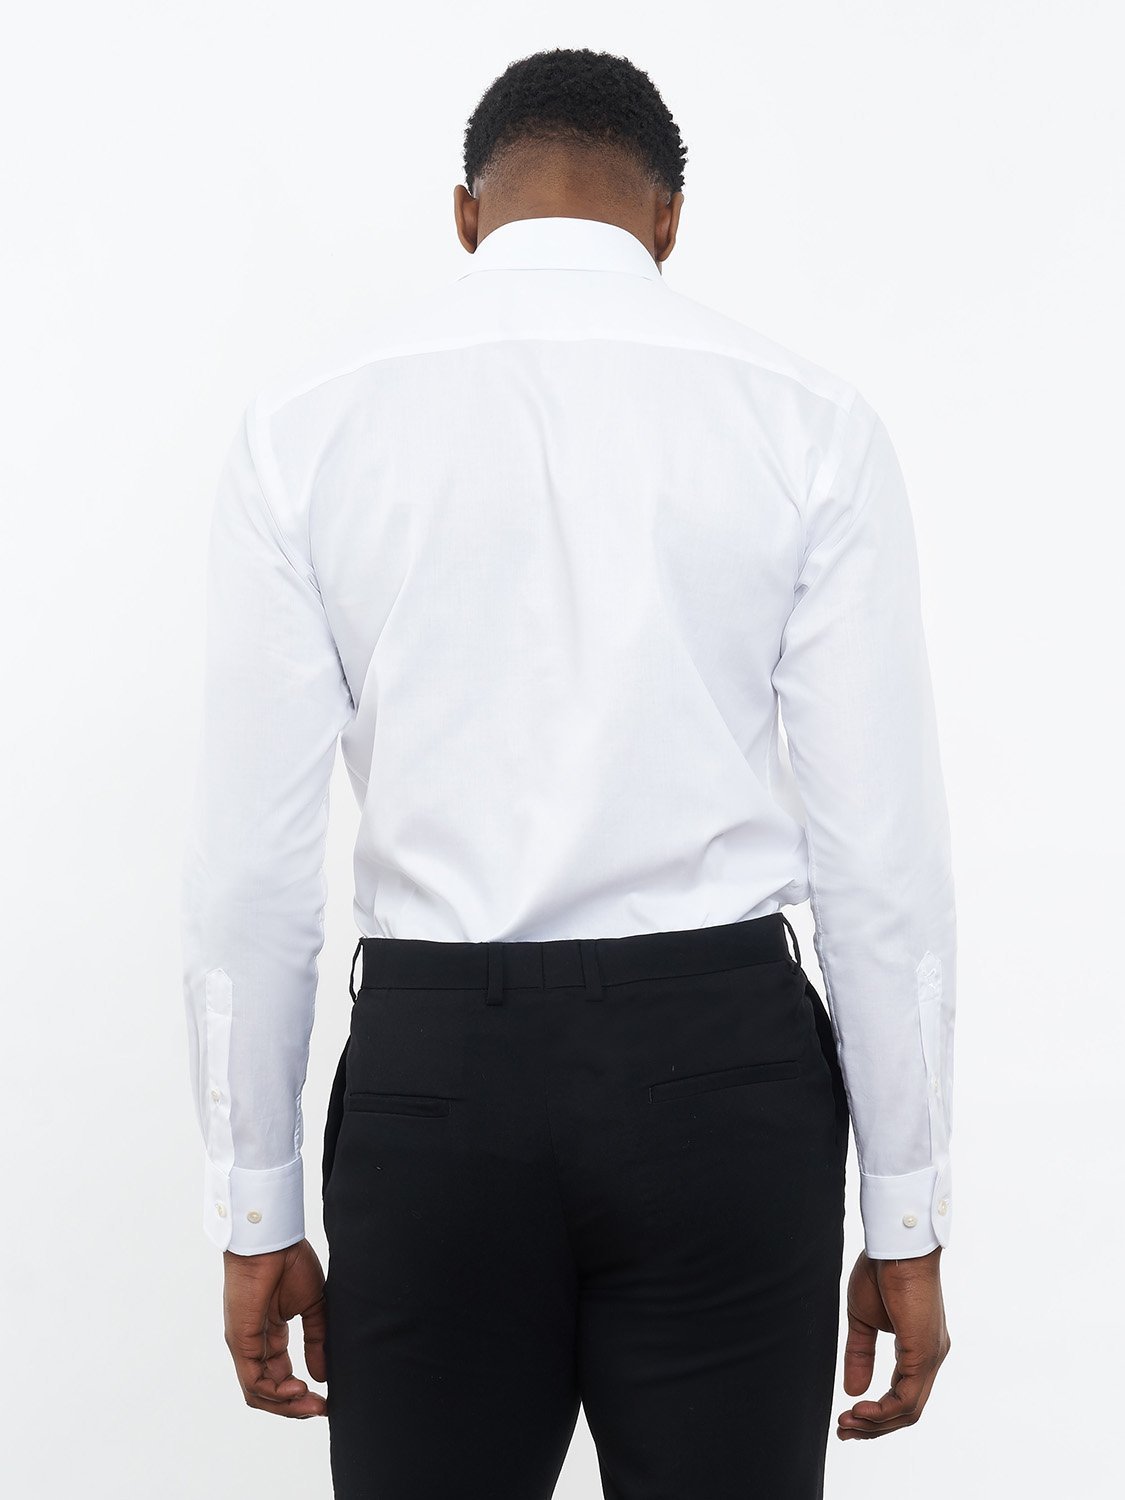 carpasus sustainable organic cotton dress shirt white. Nachhaltiges Carpasus Businesshemd aus Bio Baumwolle in Weiss